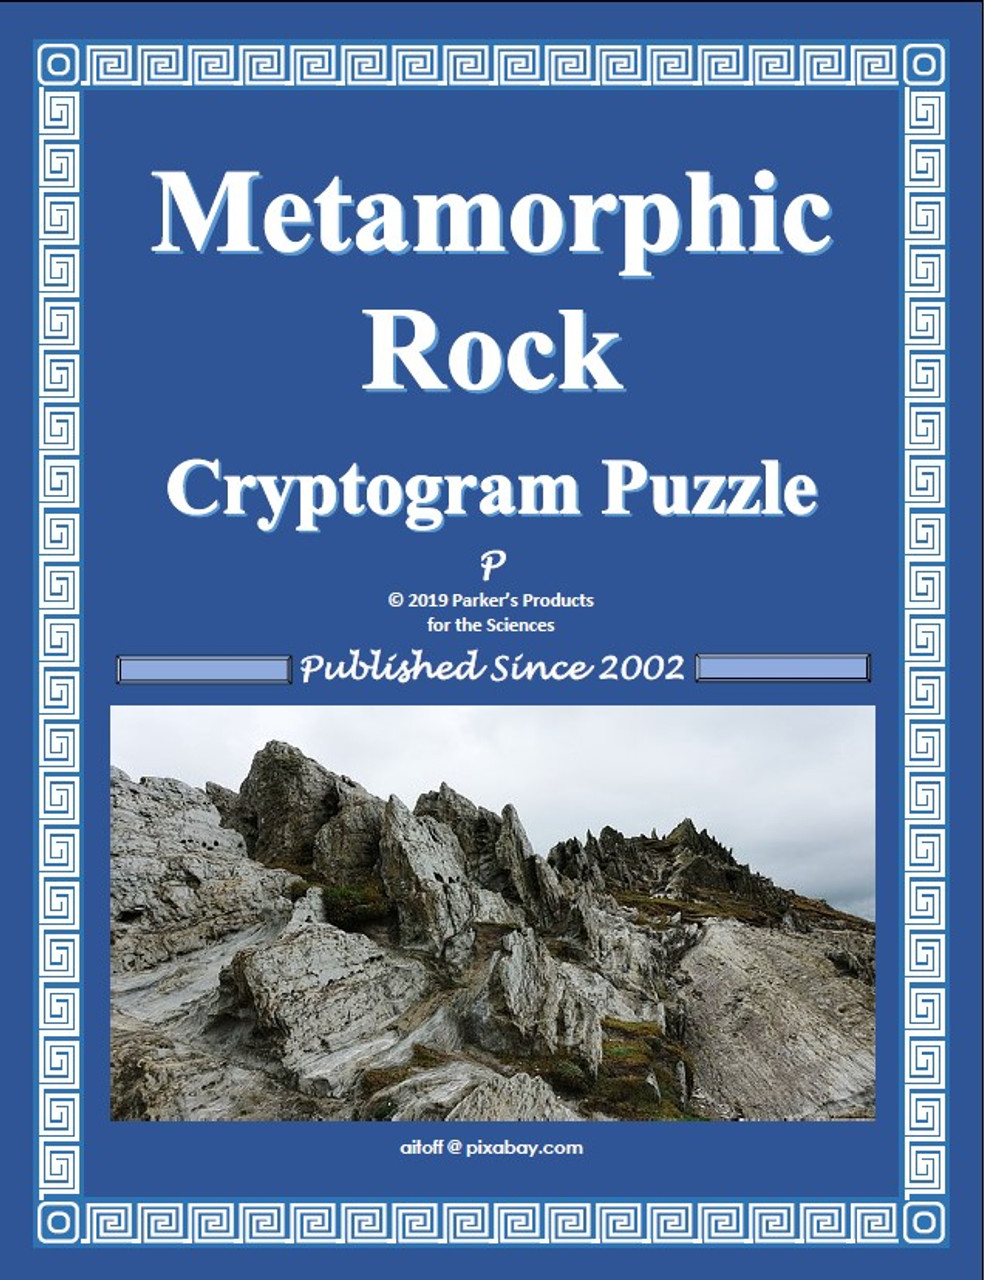 Metamorphic Rock Cryptogram Puzzle (Ideal Emergency Sub Plan!)